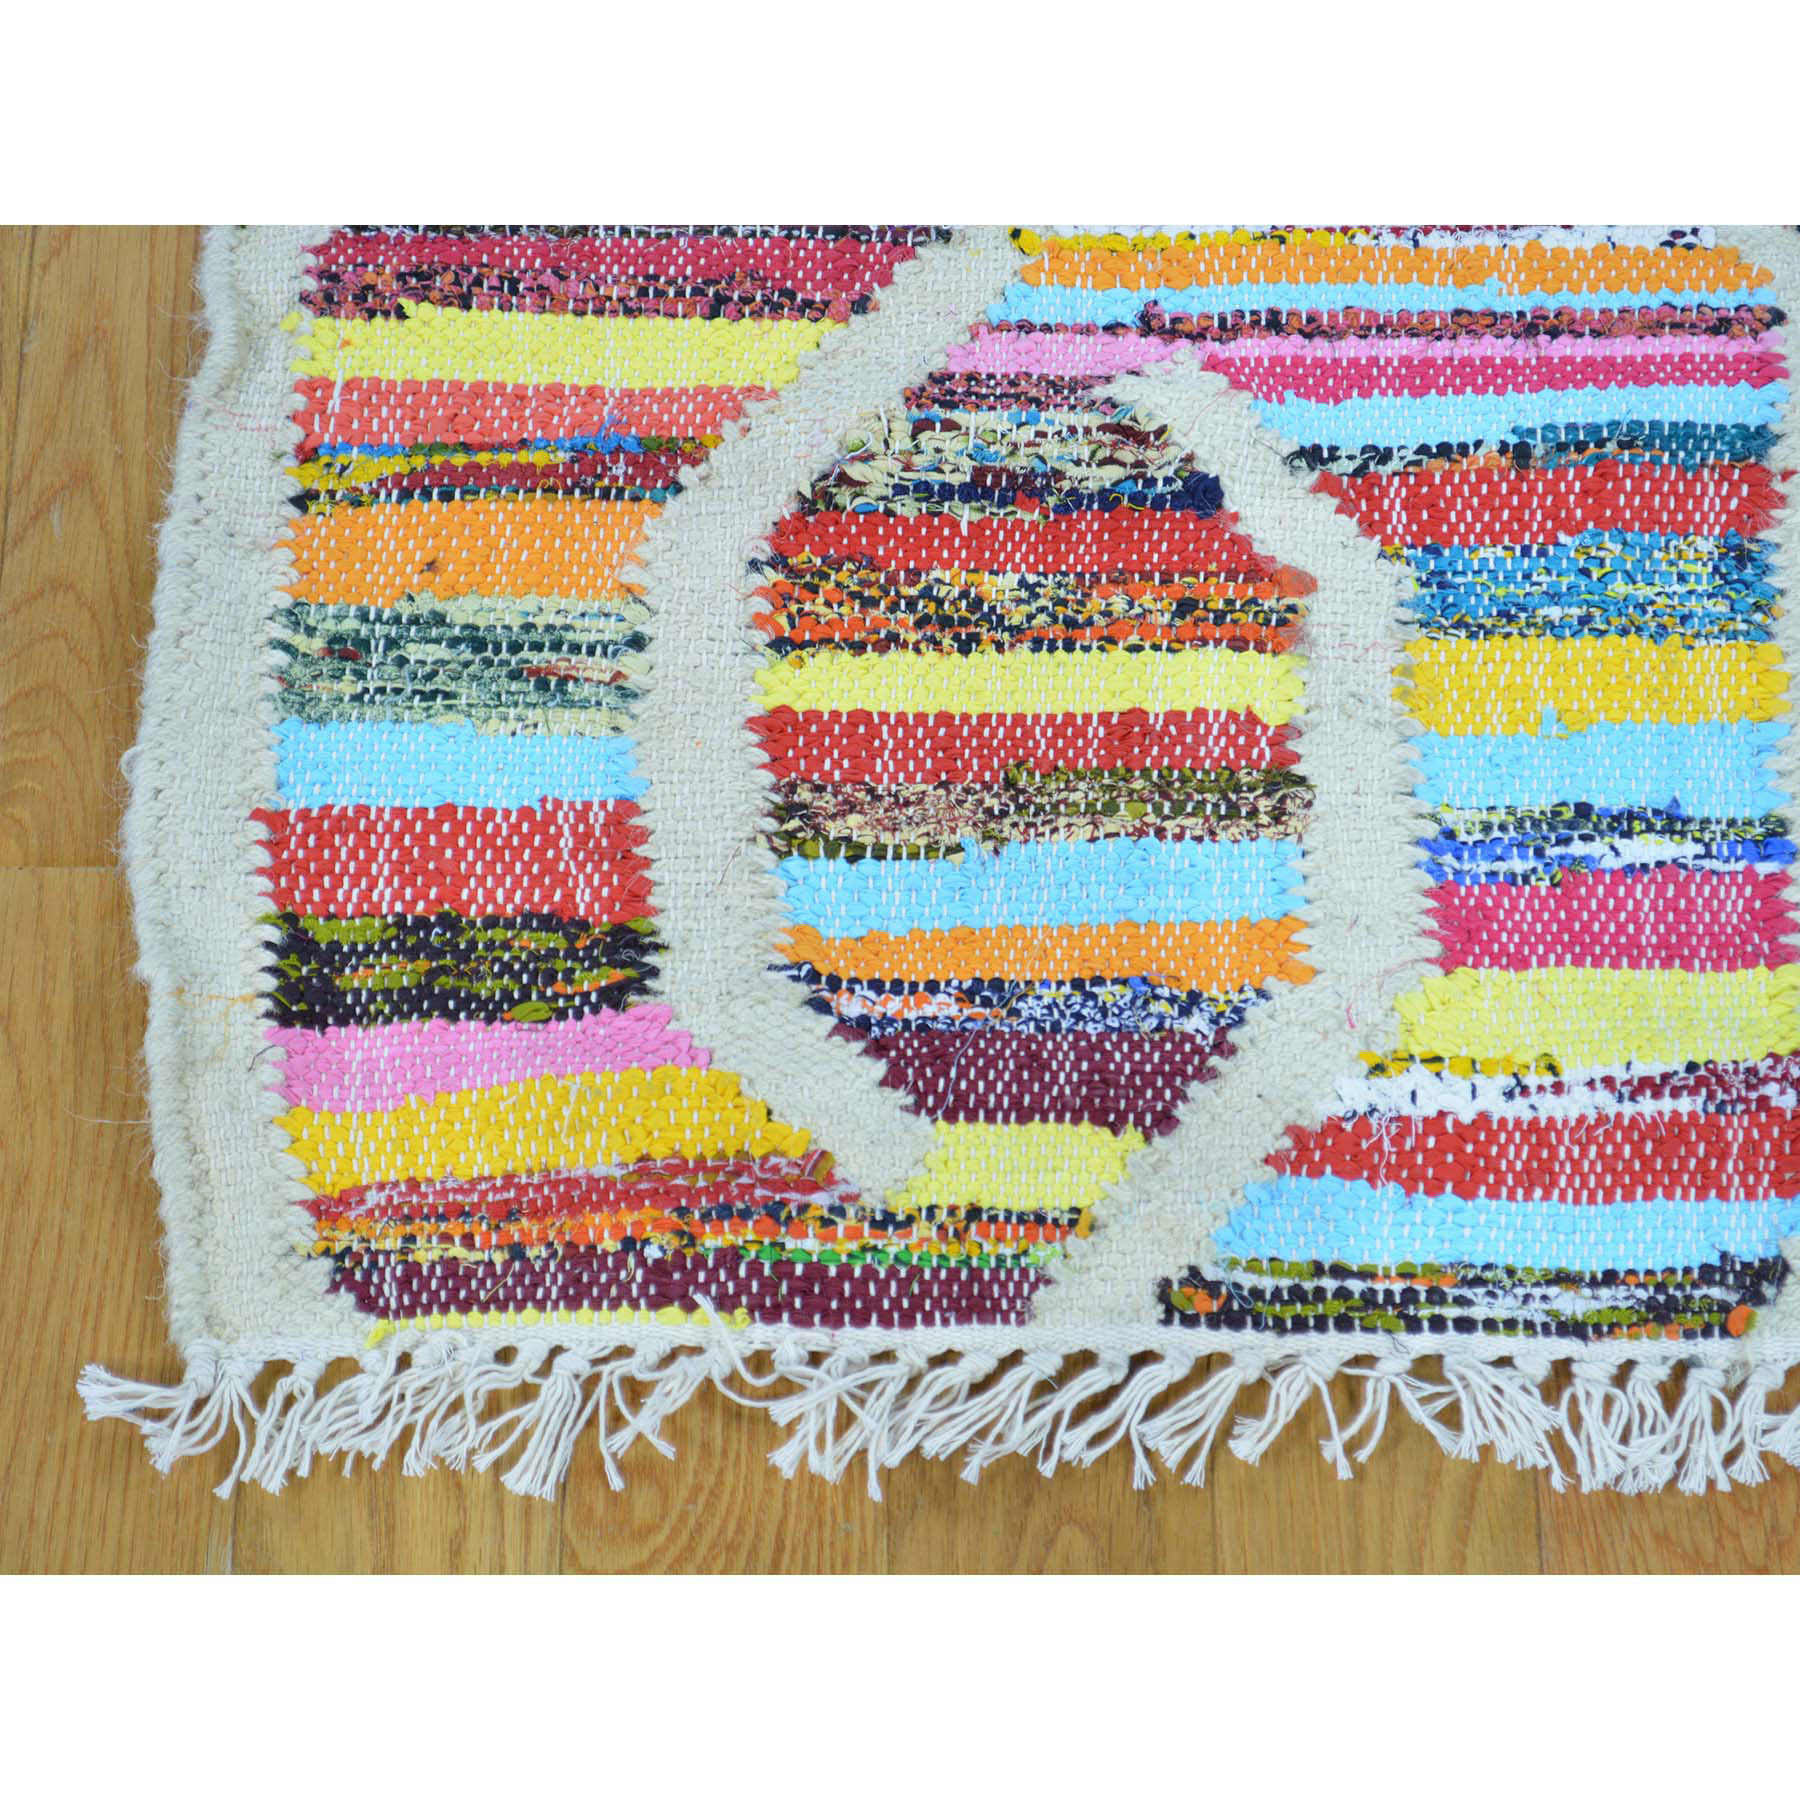 2-6 x8- Hand Woven Colorful Flat Weave Kilim Runner Oriental Rug 